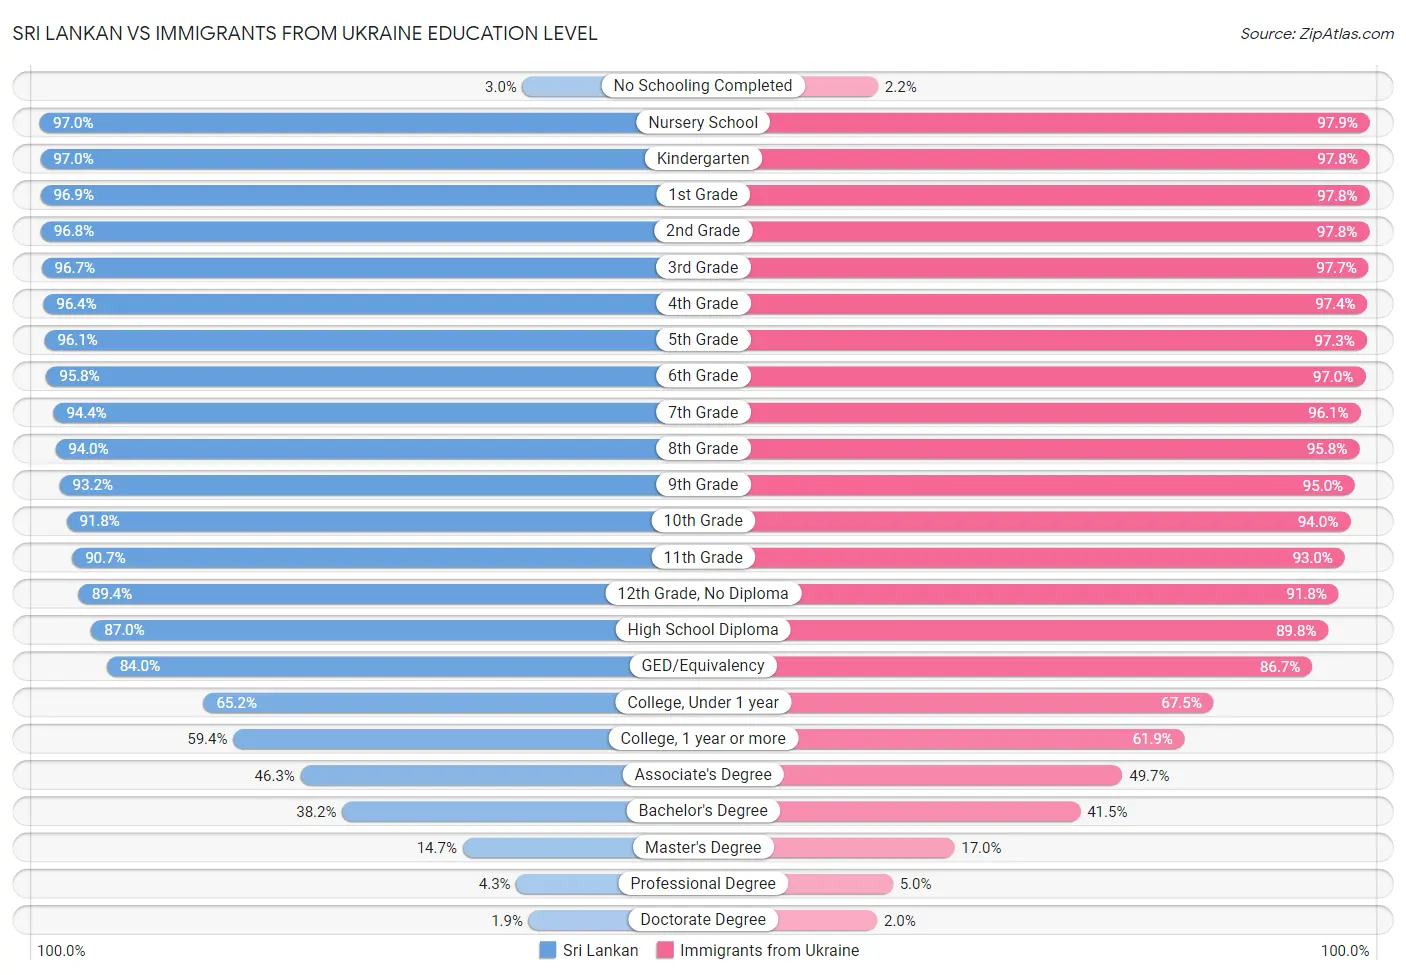 Sri Lankan vs Immigrants from Ukraine Education Level